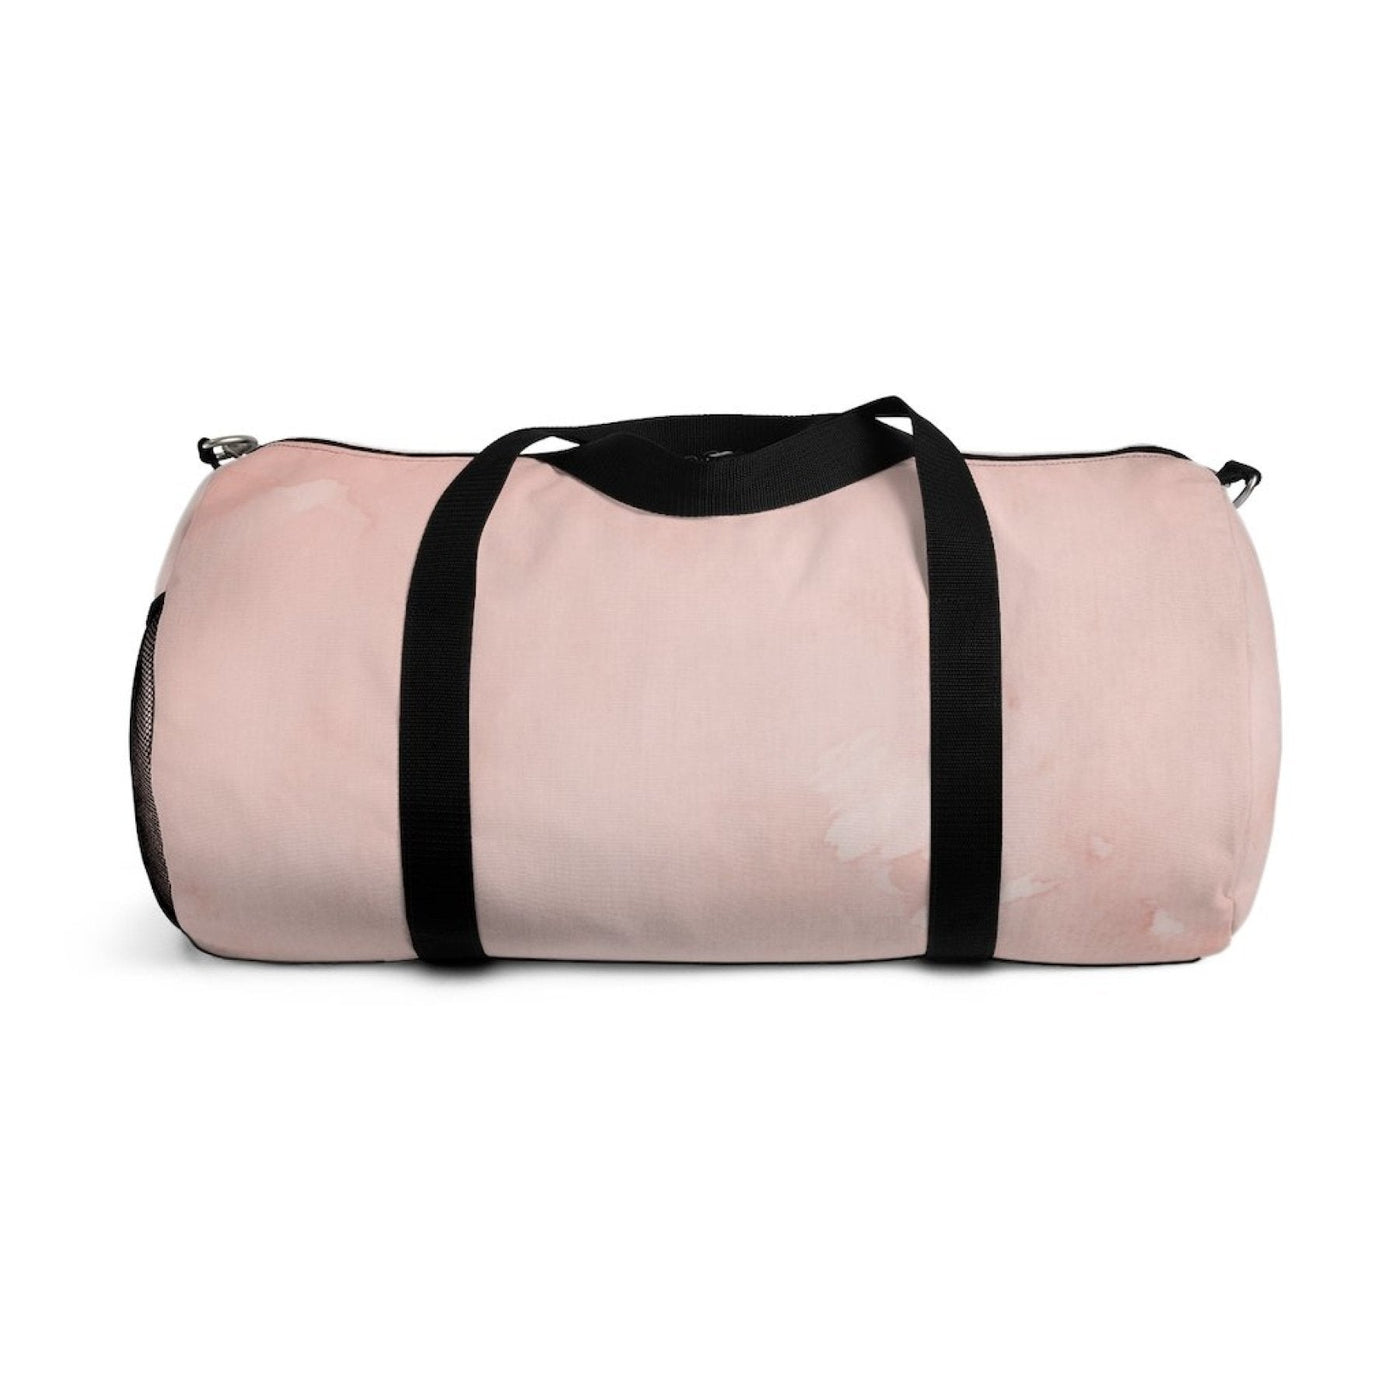 Duffel Bag Carry On Luggage Peach Marble - Bags | Duffel Bags